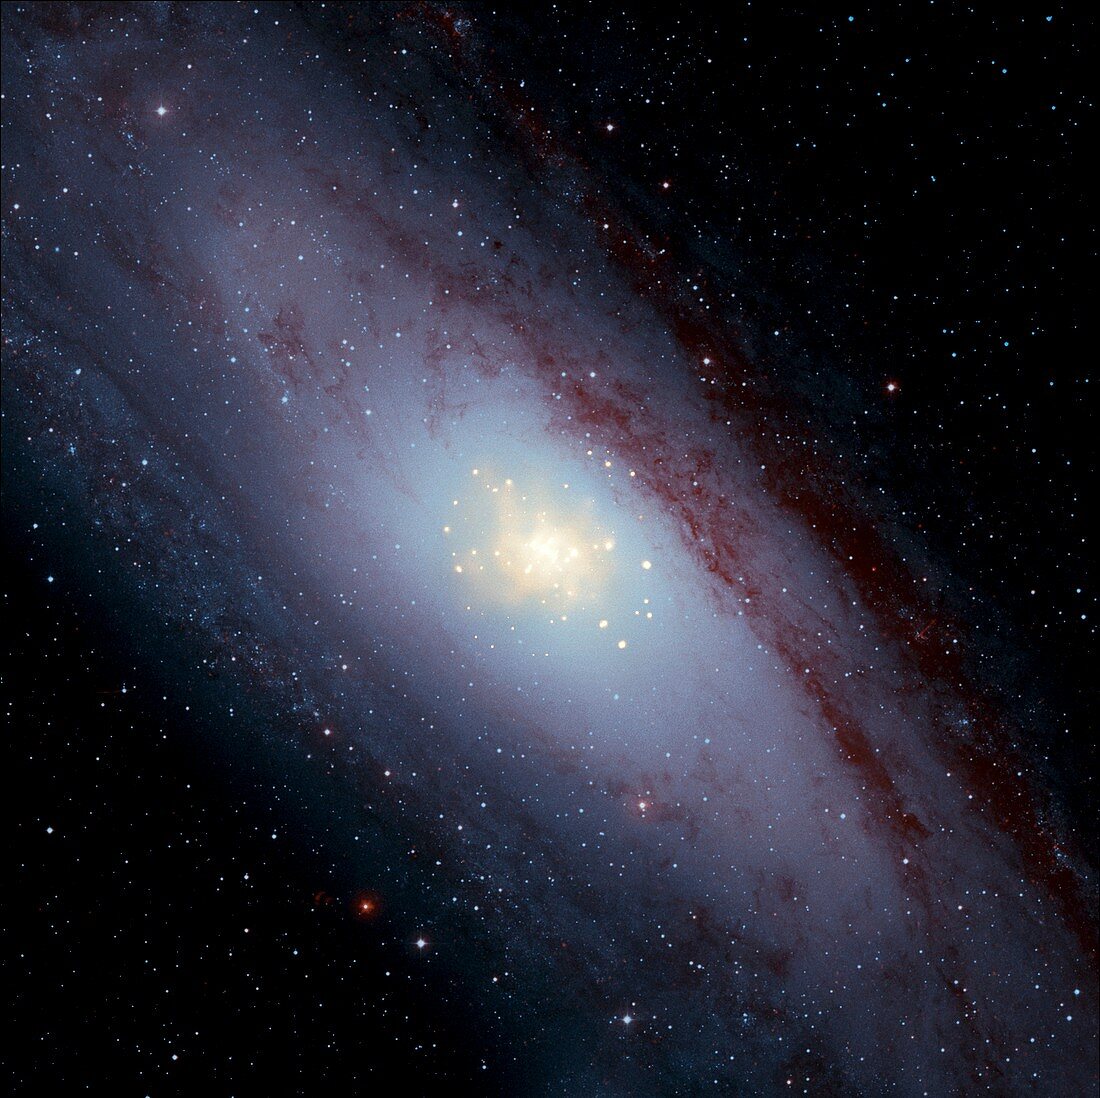 Andromeda Galaxy,composite image